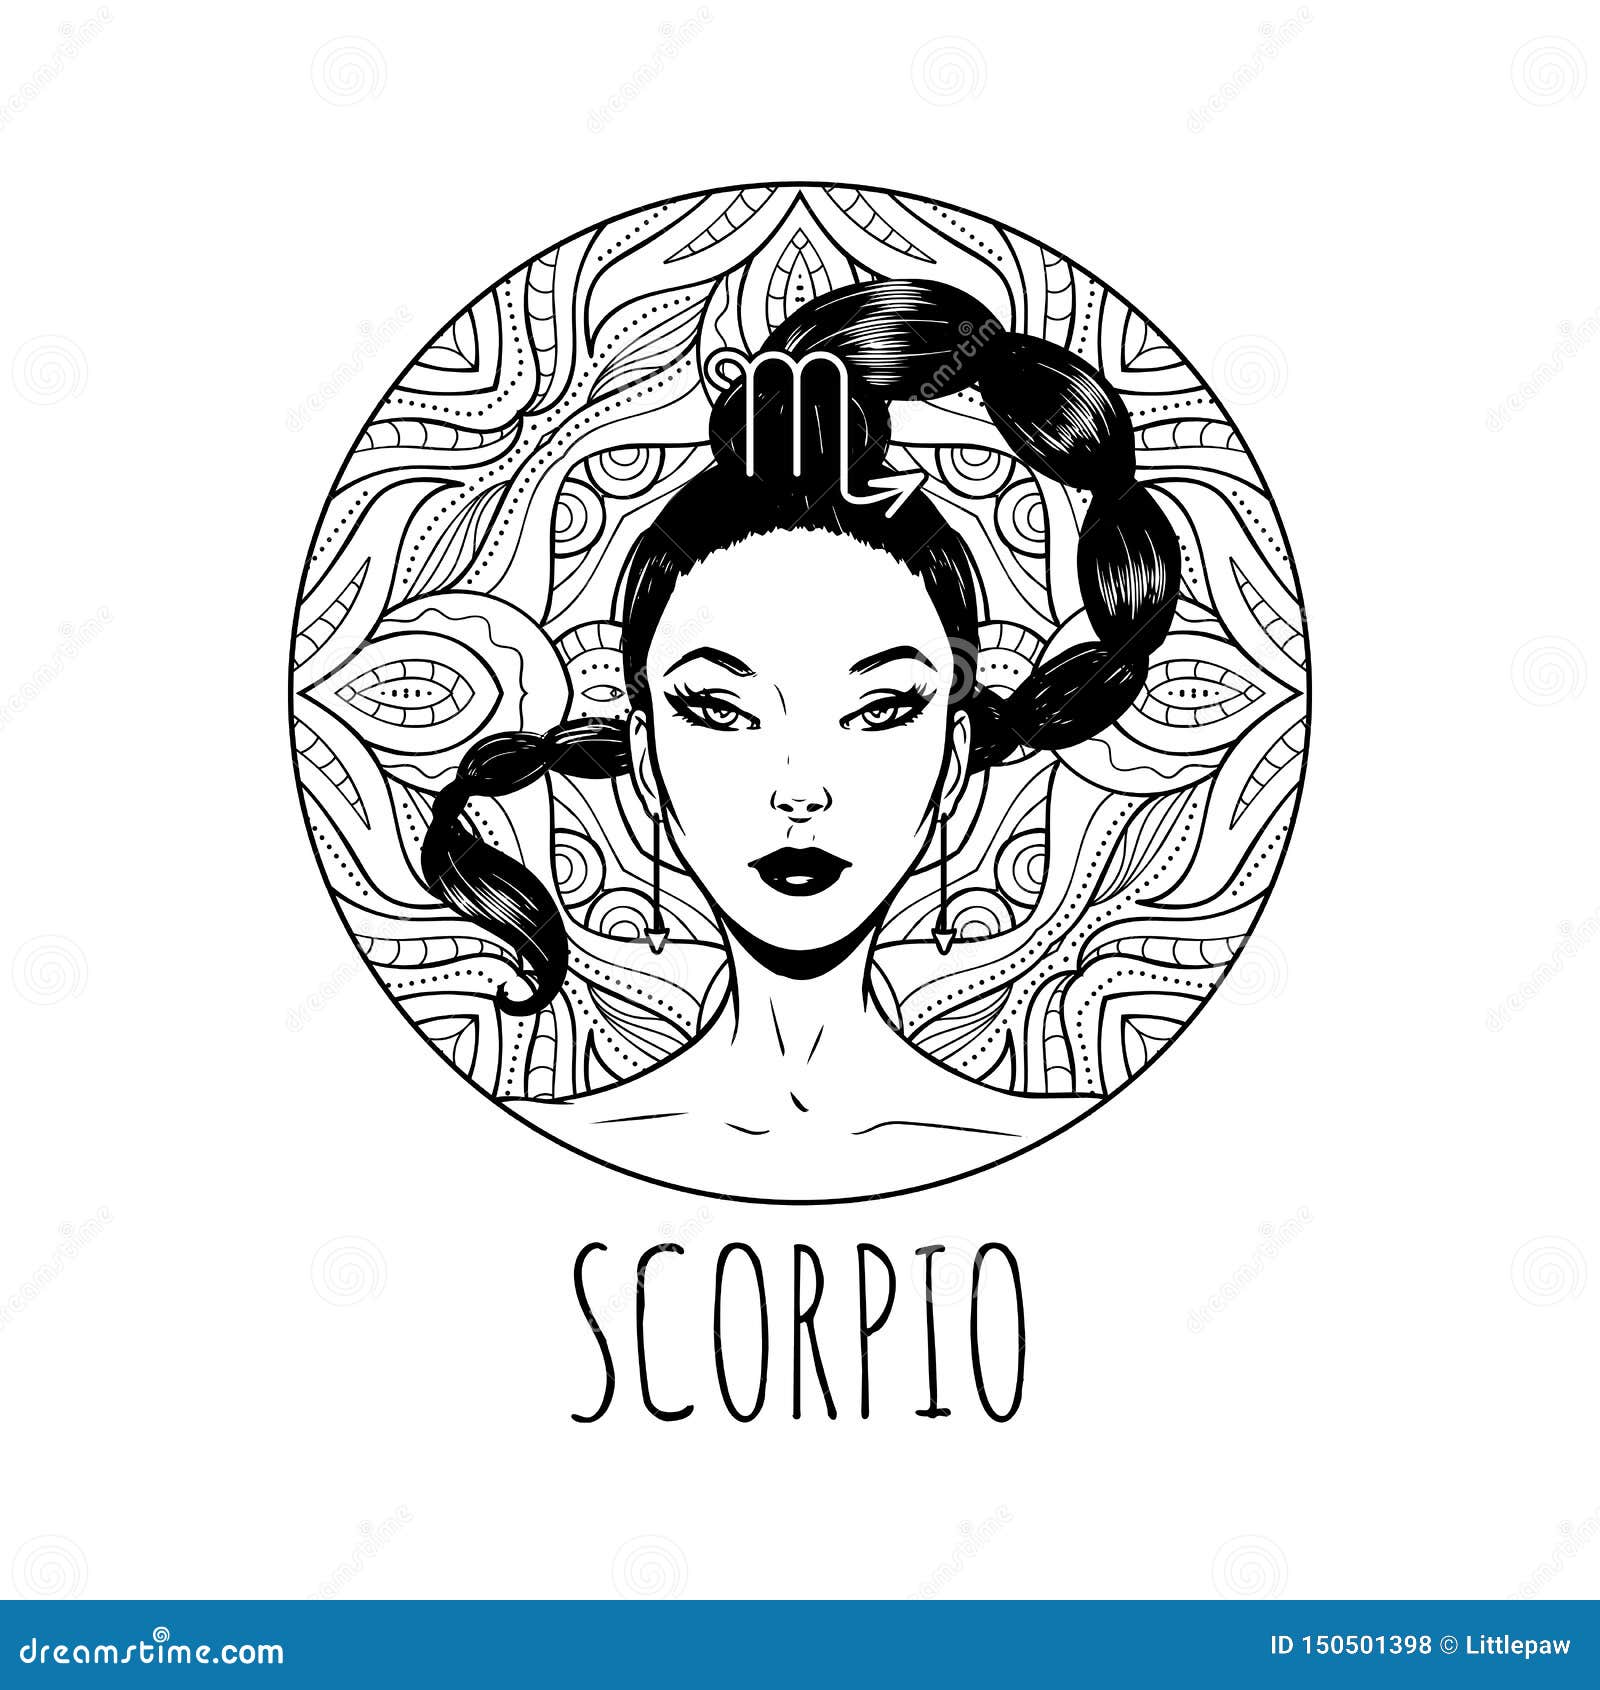 Scorpio Zodiac Sign Artwork, Adult Coloring Book Page, Beautiful ...